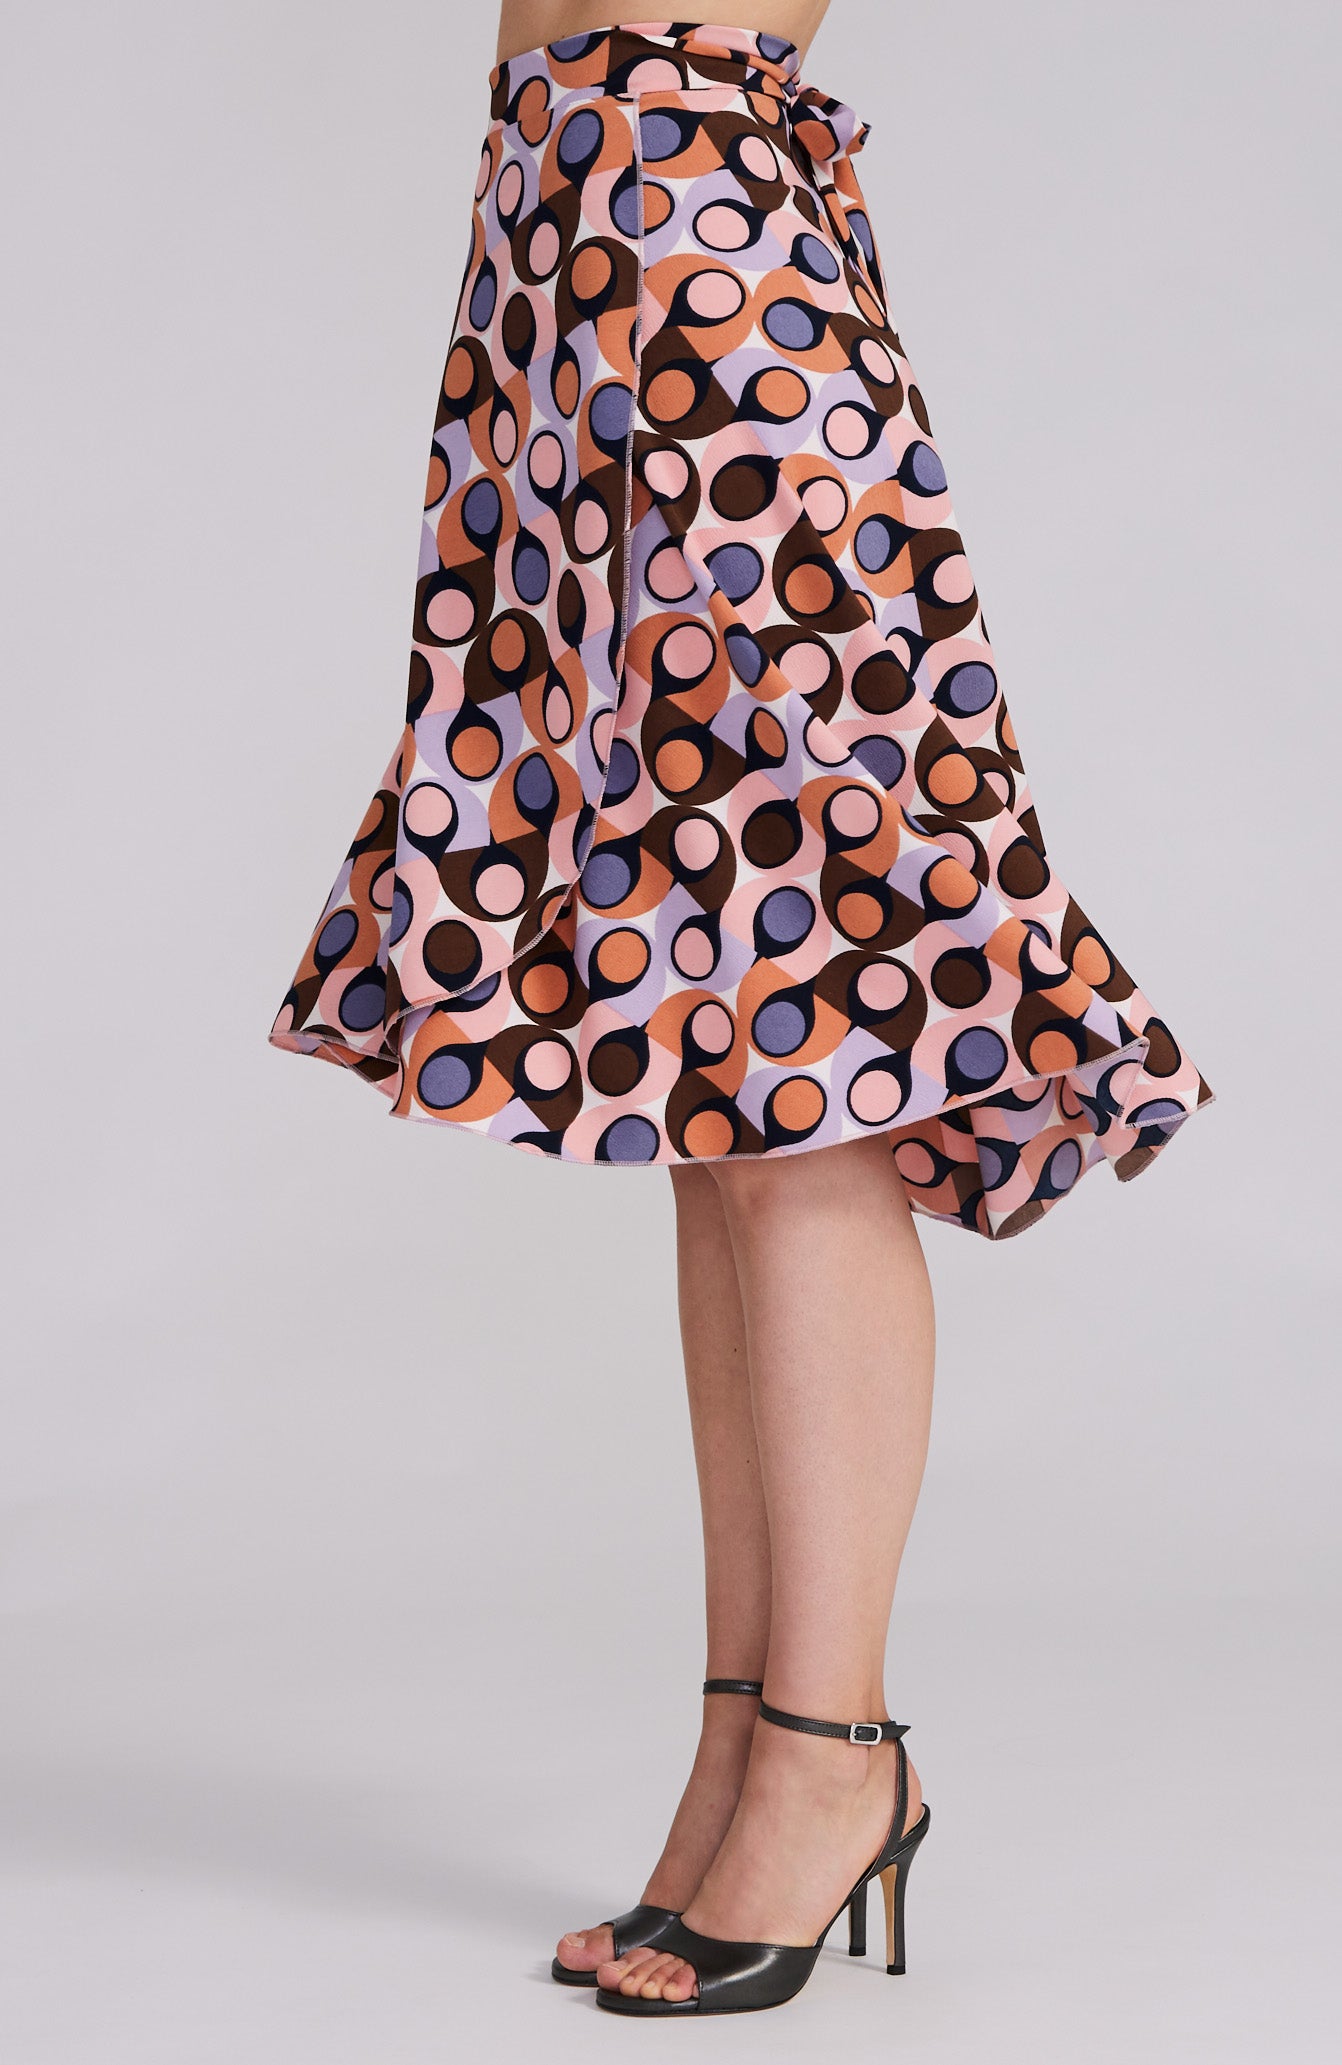 tango skirt in sixties print